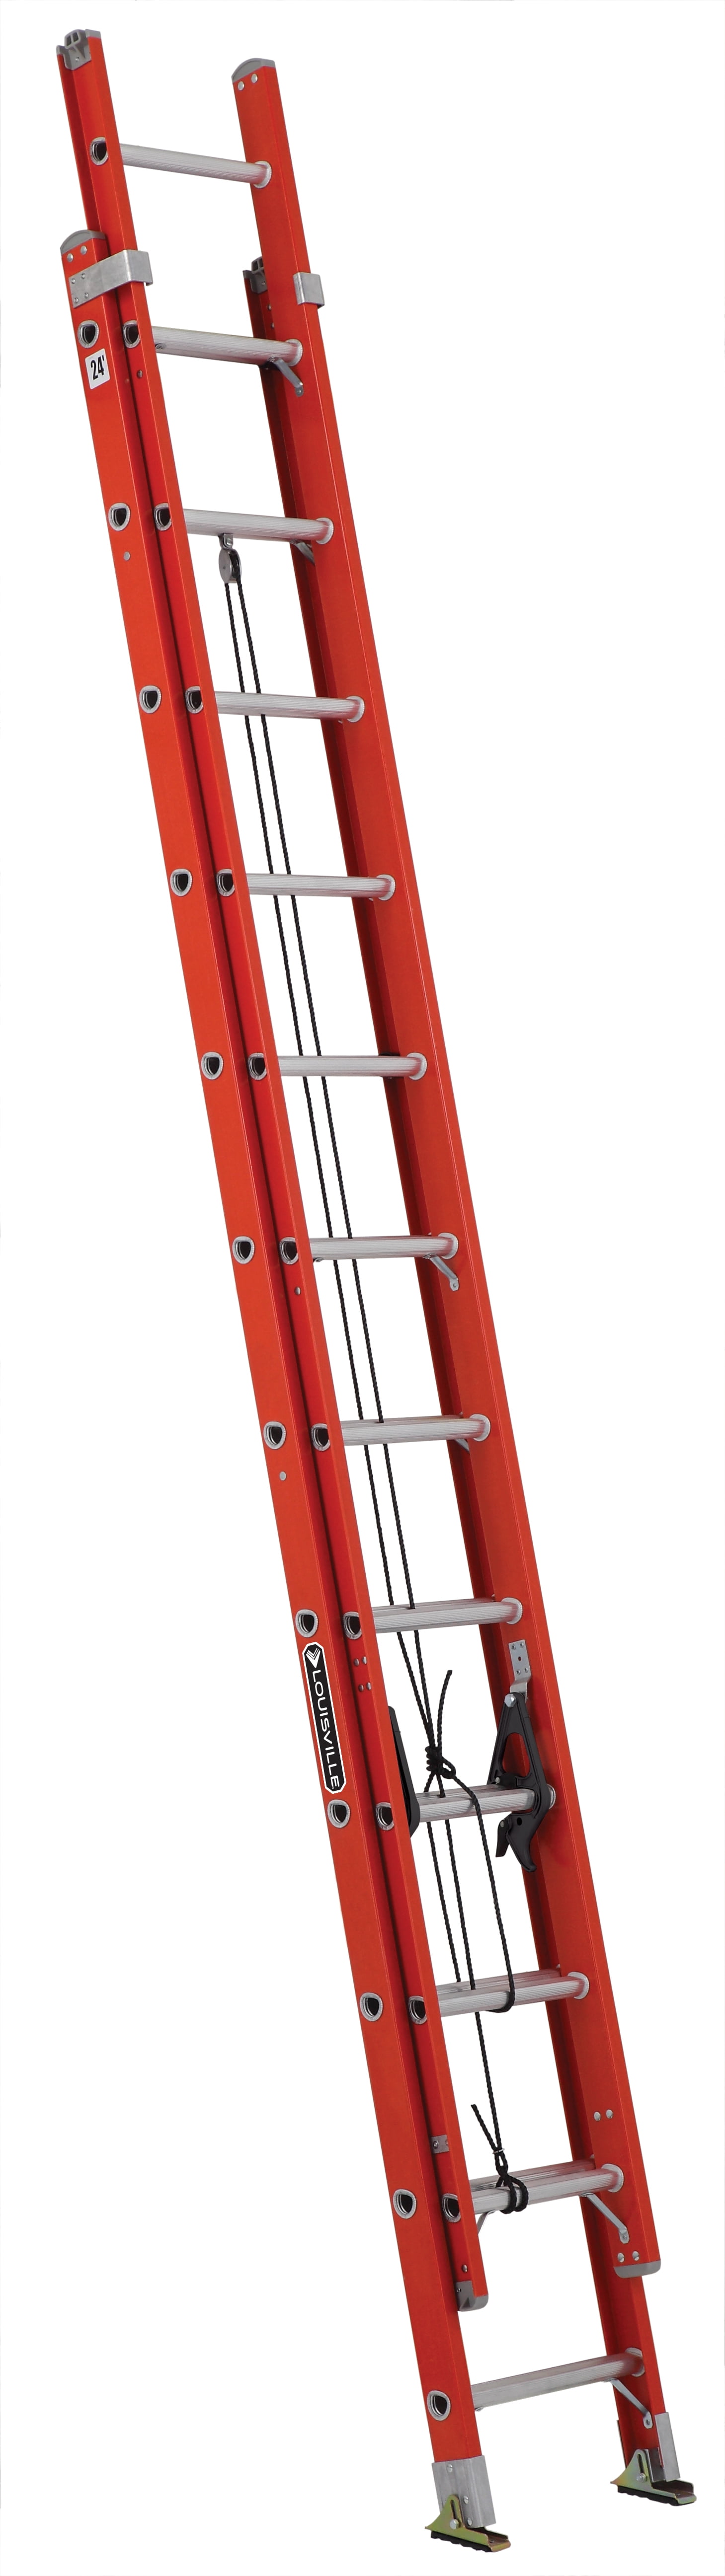 24 ladder